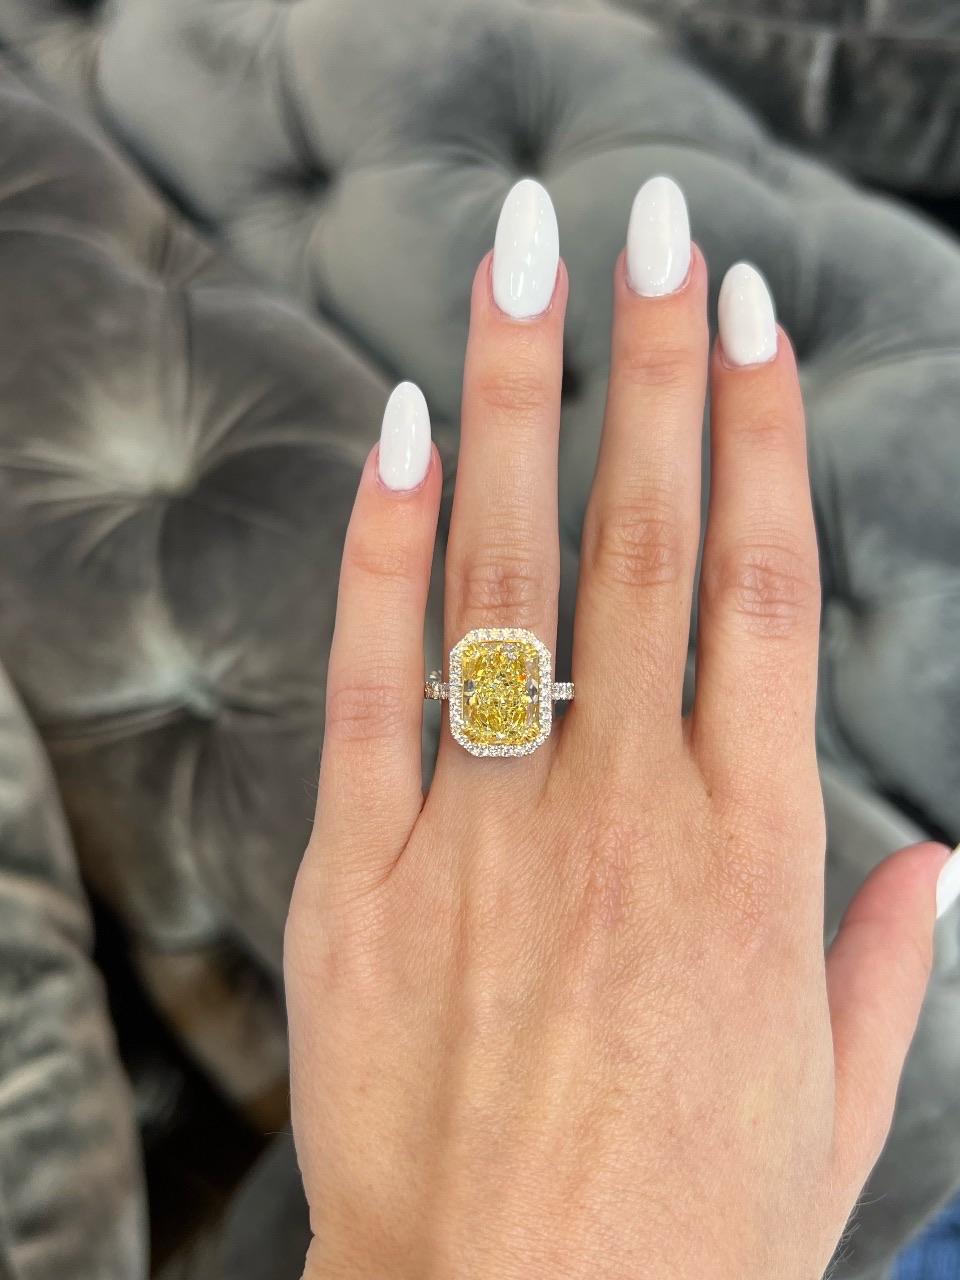 David Rosenberg 6.54 Ct Radiant Light Yellow GIA Diamond Engagement Ring For Sale 2